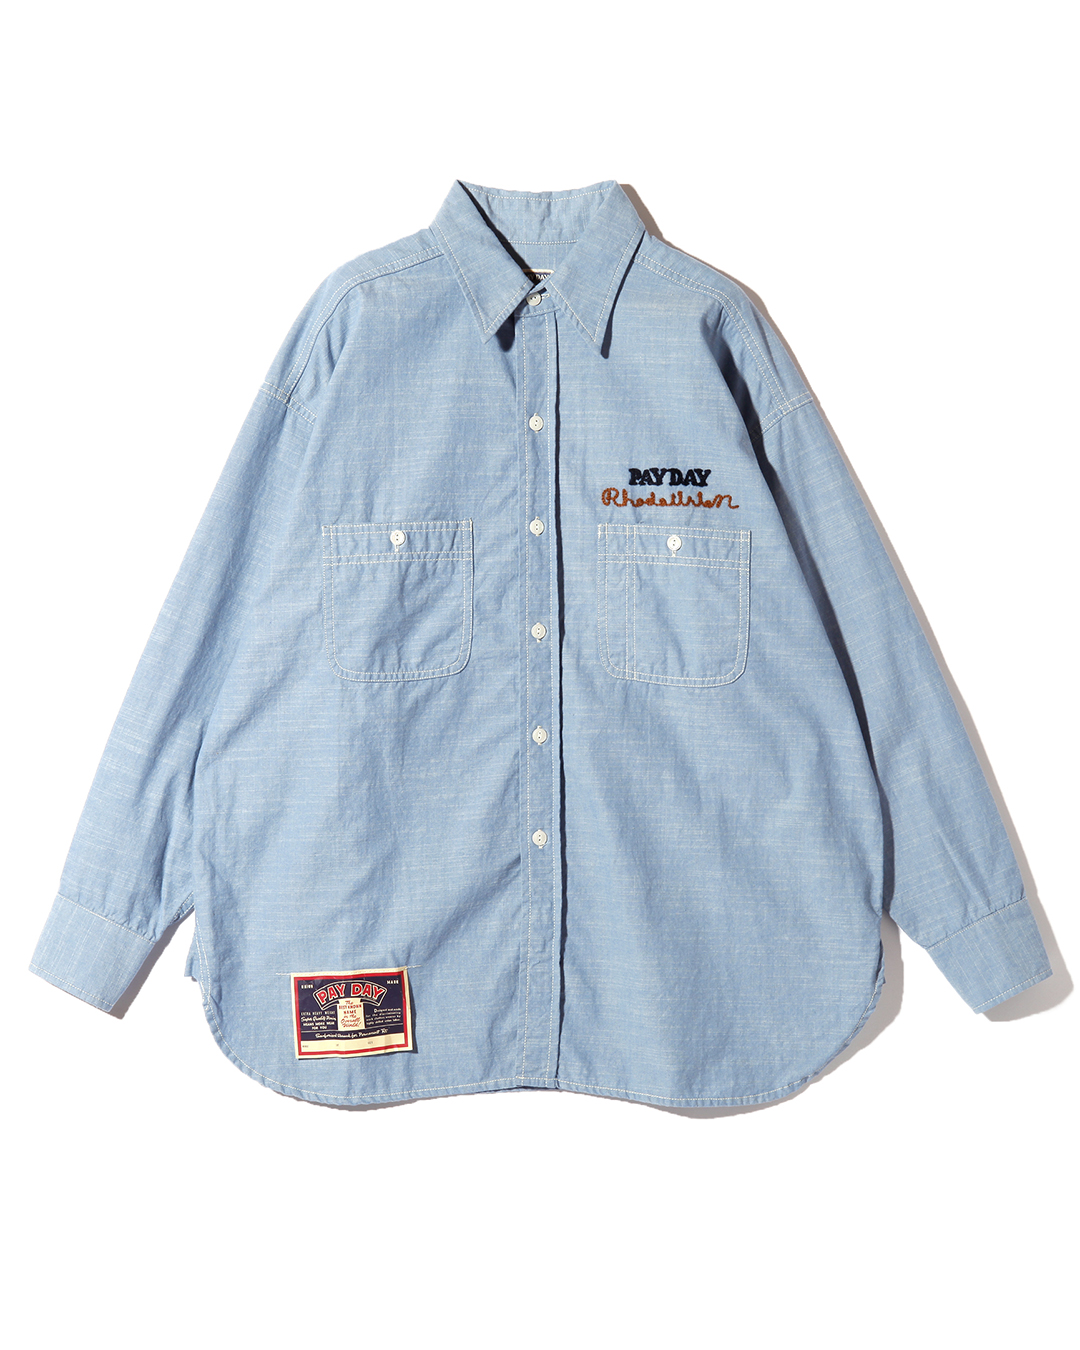 Work Shirt-Chambray ¥24,200